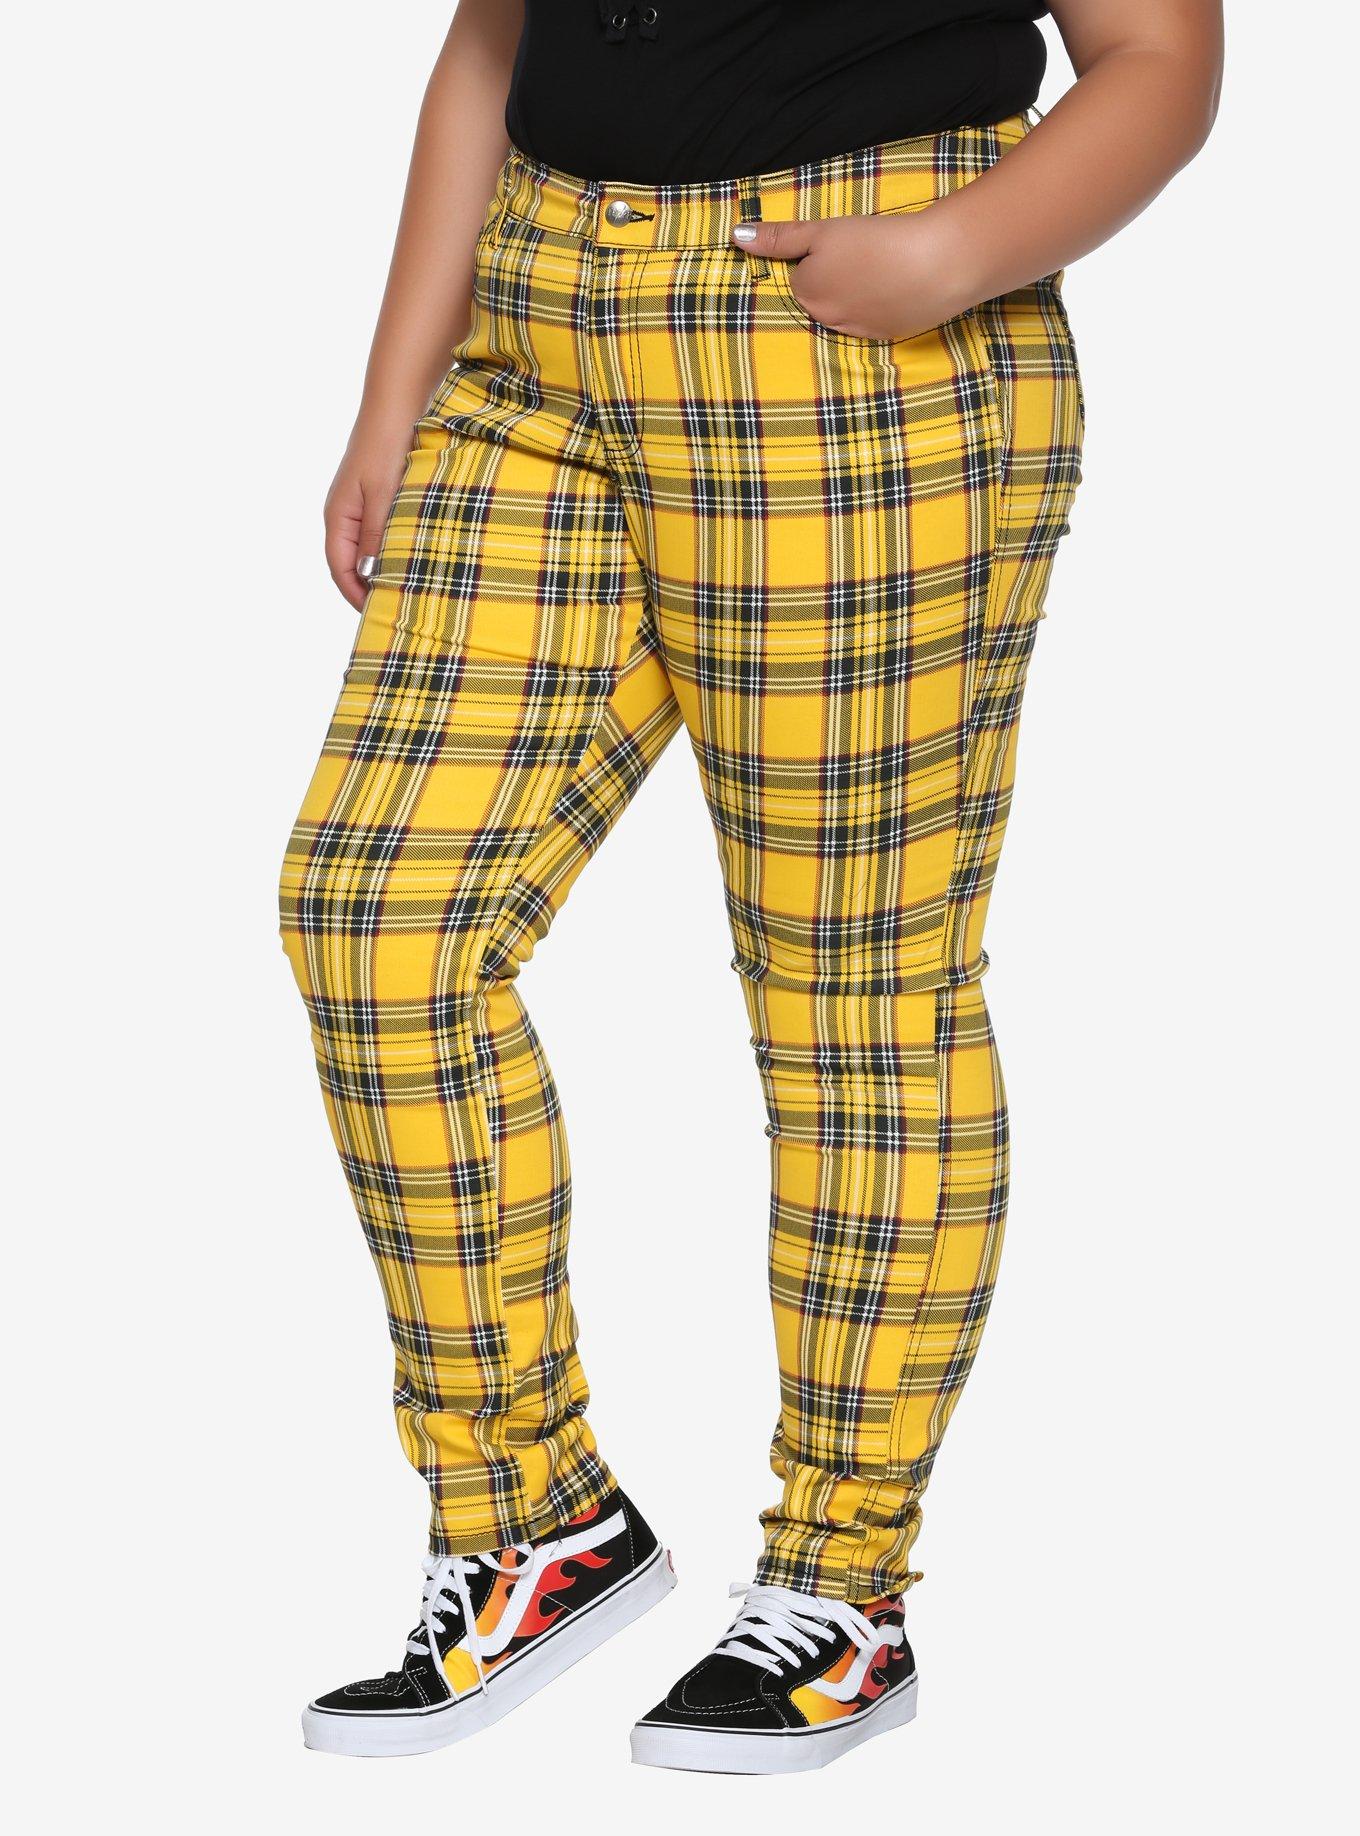 Tripp Yellow Plaid Girls Skinny Pants Plus Size